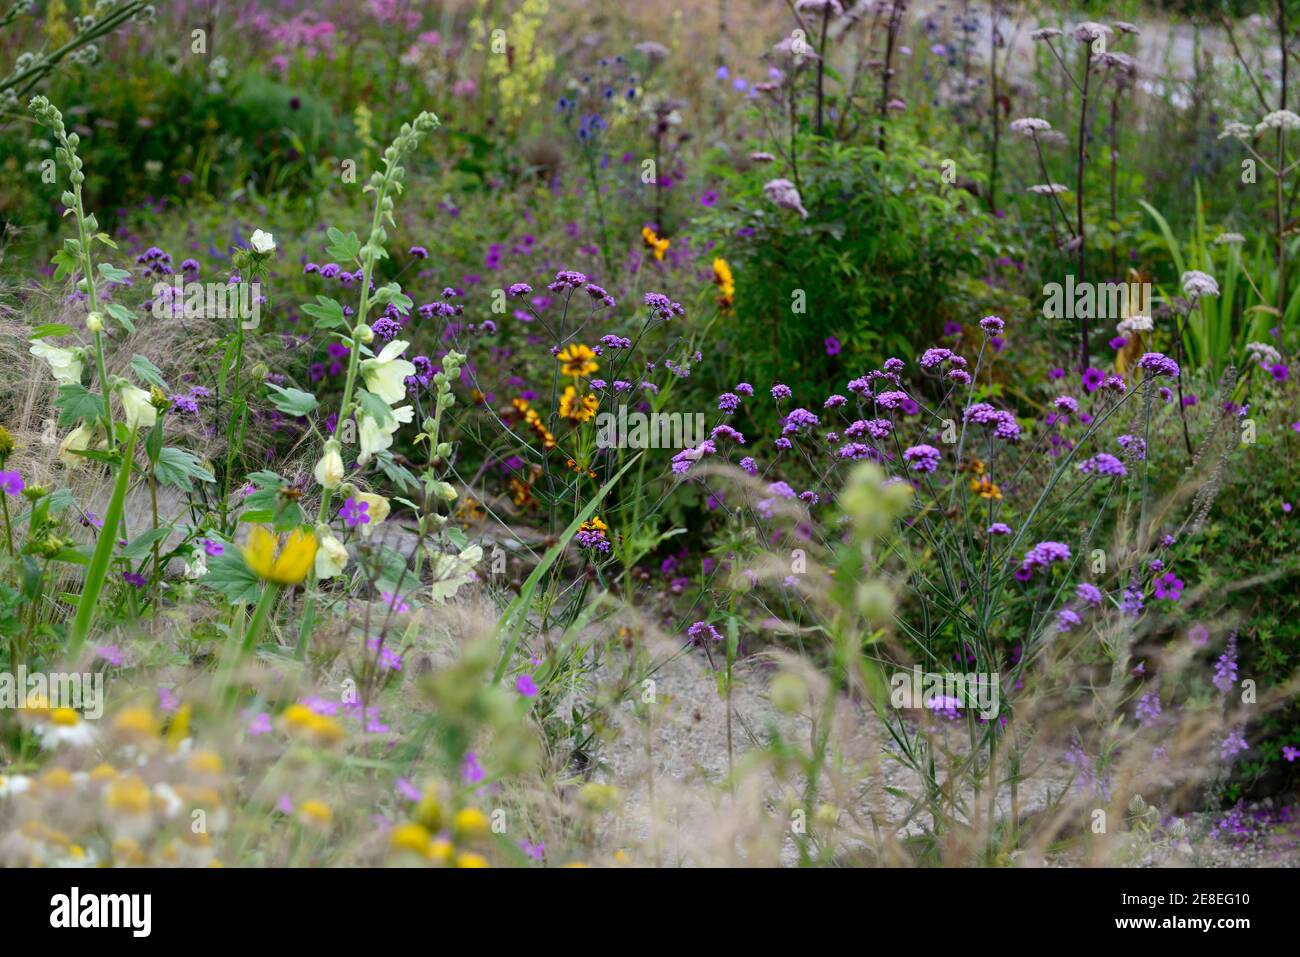 Verbena bonariensis, hohe mehrjährige, lila Blüten, Blumen, gemischte Bepflanzung, gemischte Grenze, gemischte Pflanzung Schema, Prärie Stil Bepflanzung, RM Floral Stockfoto